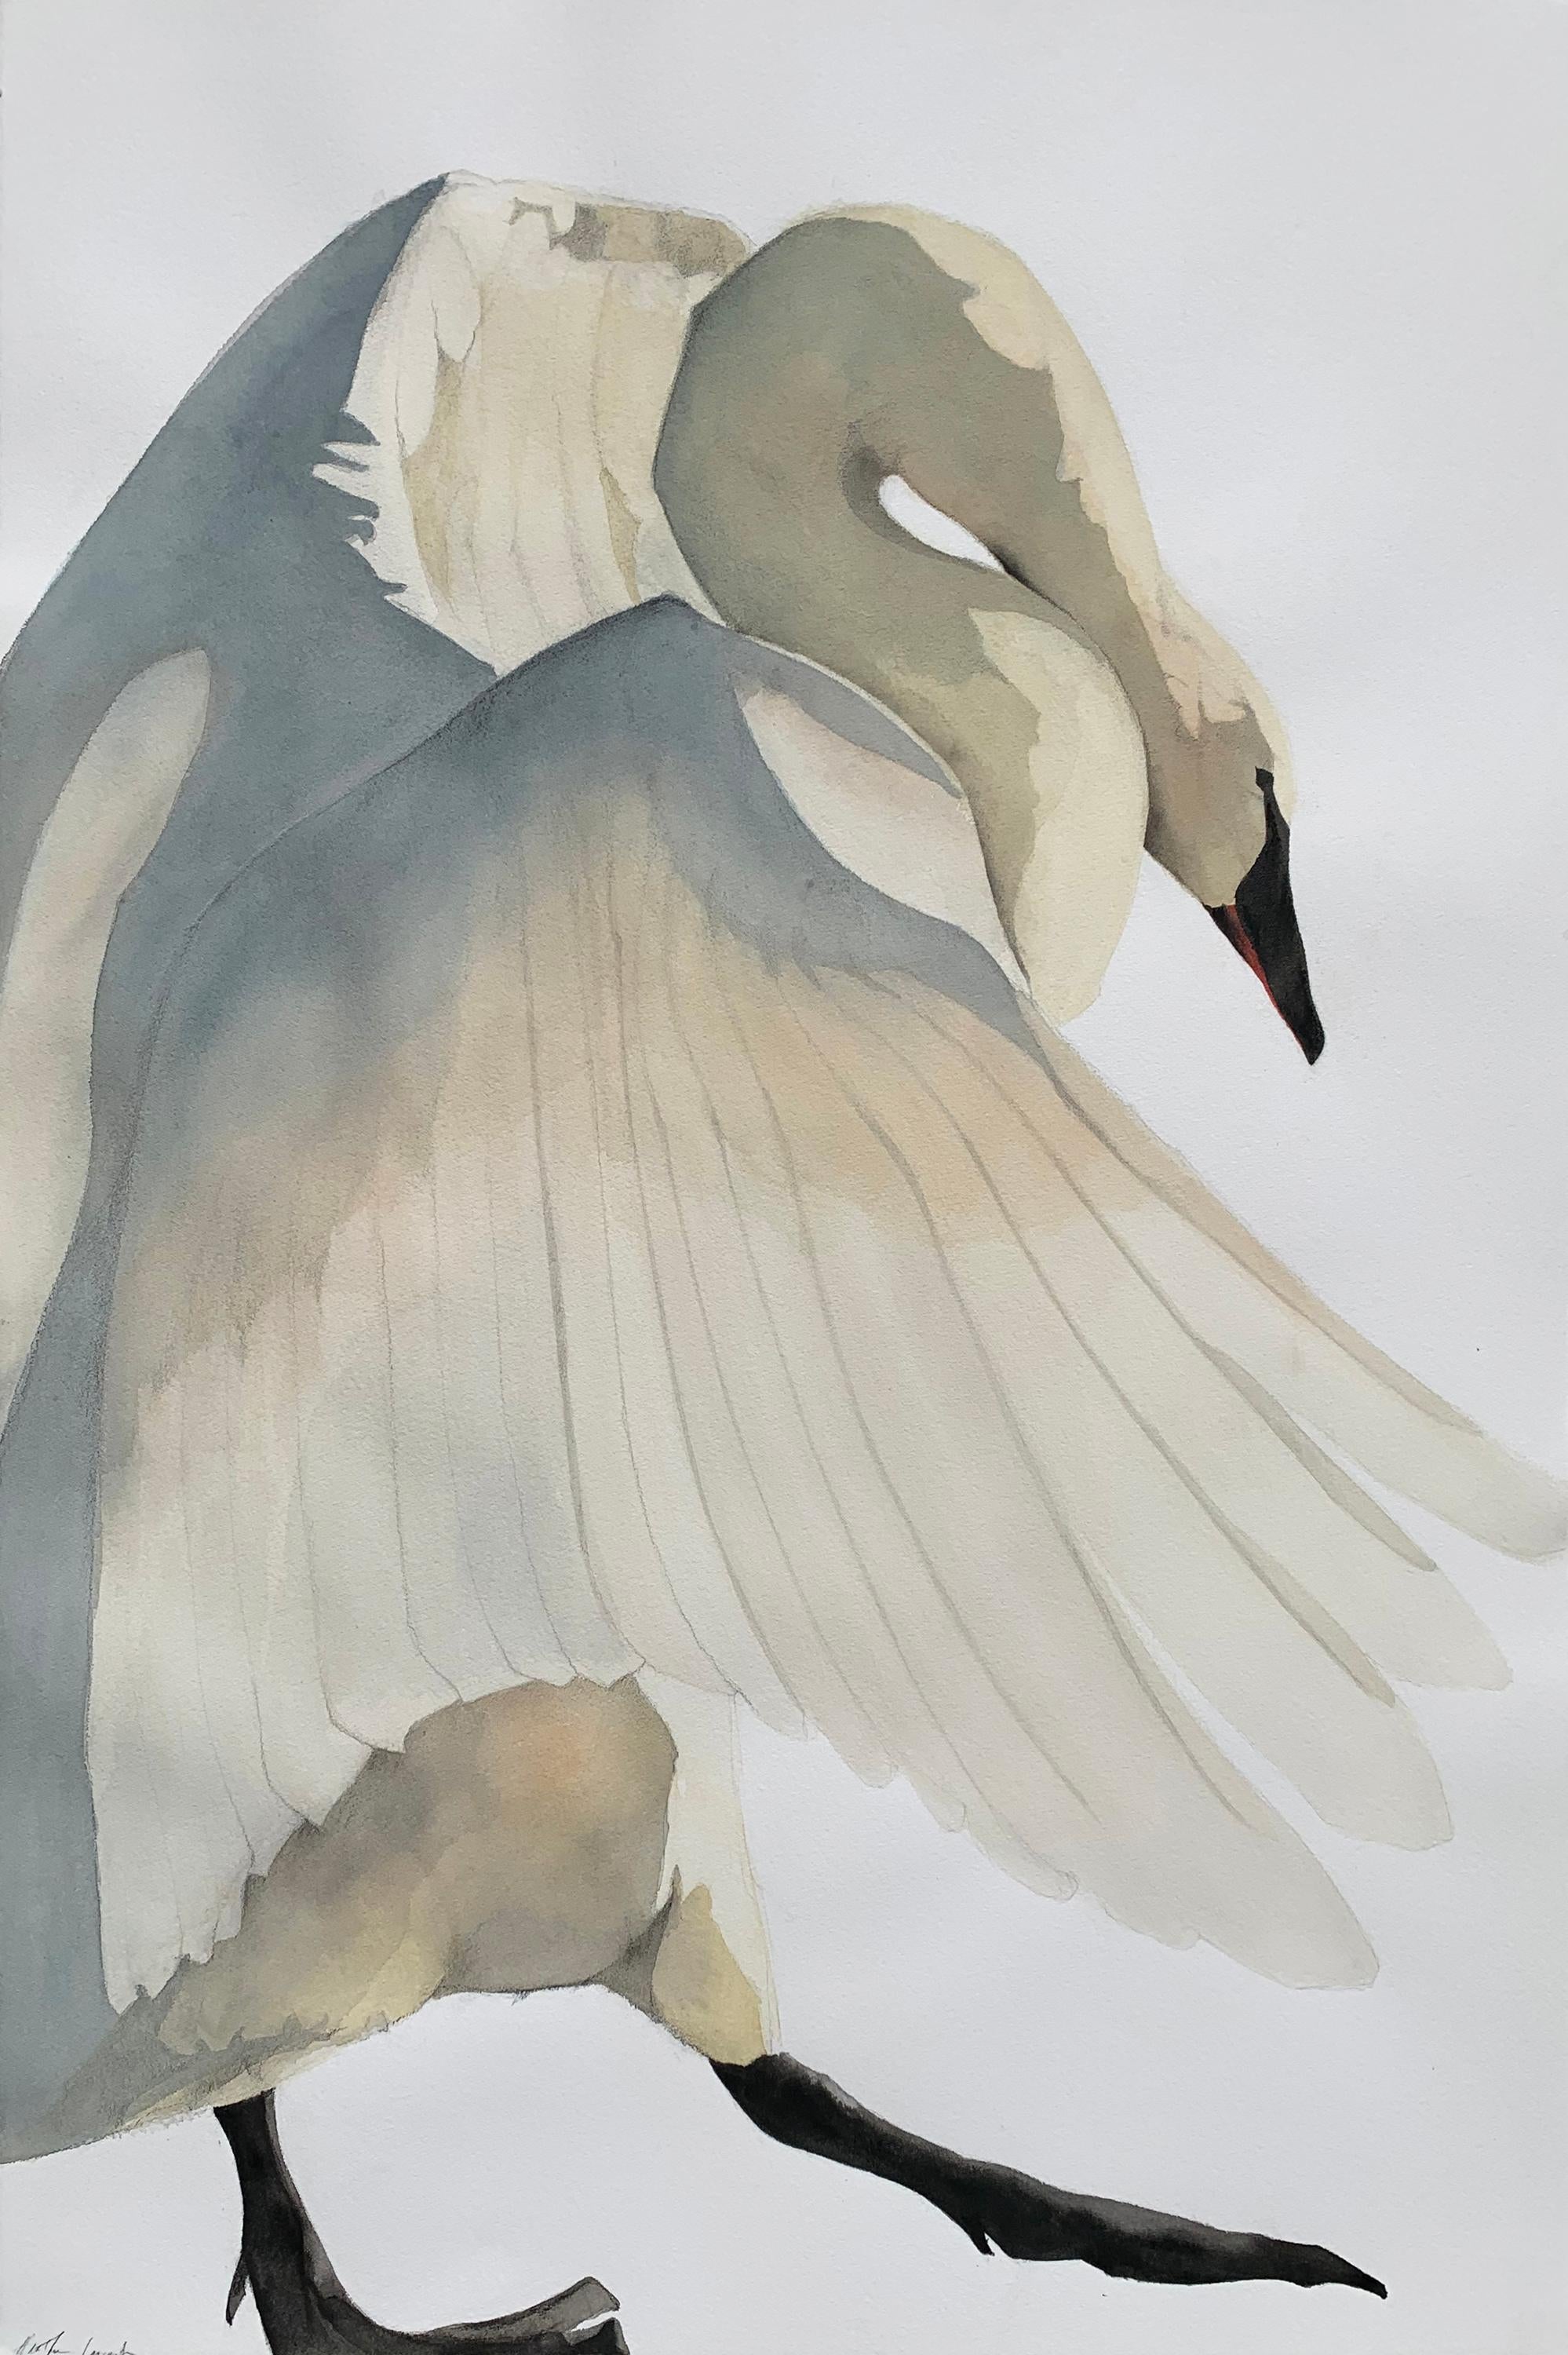 Heather Lancaster Animal Art - "Cadence" - Swan Portrait - Large Scale Animal Drawing - Audubon - Durer